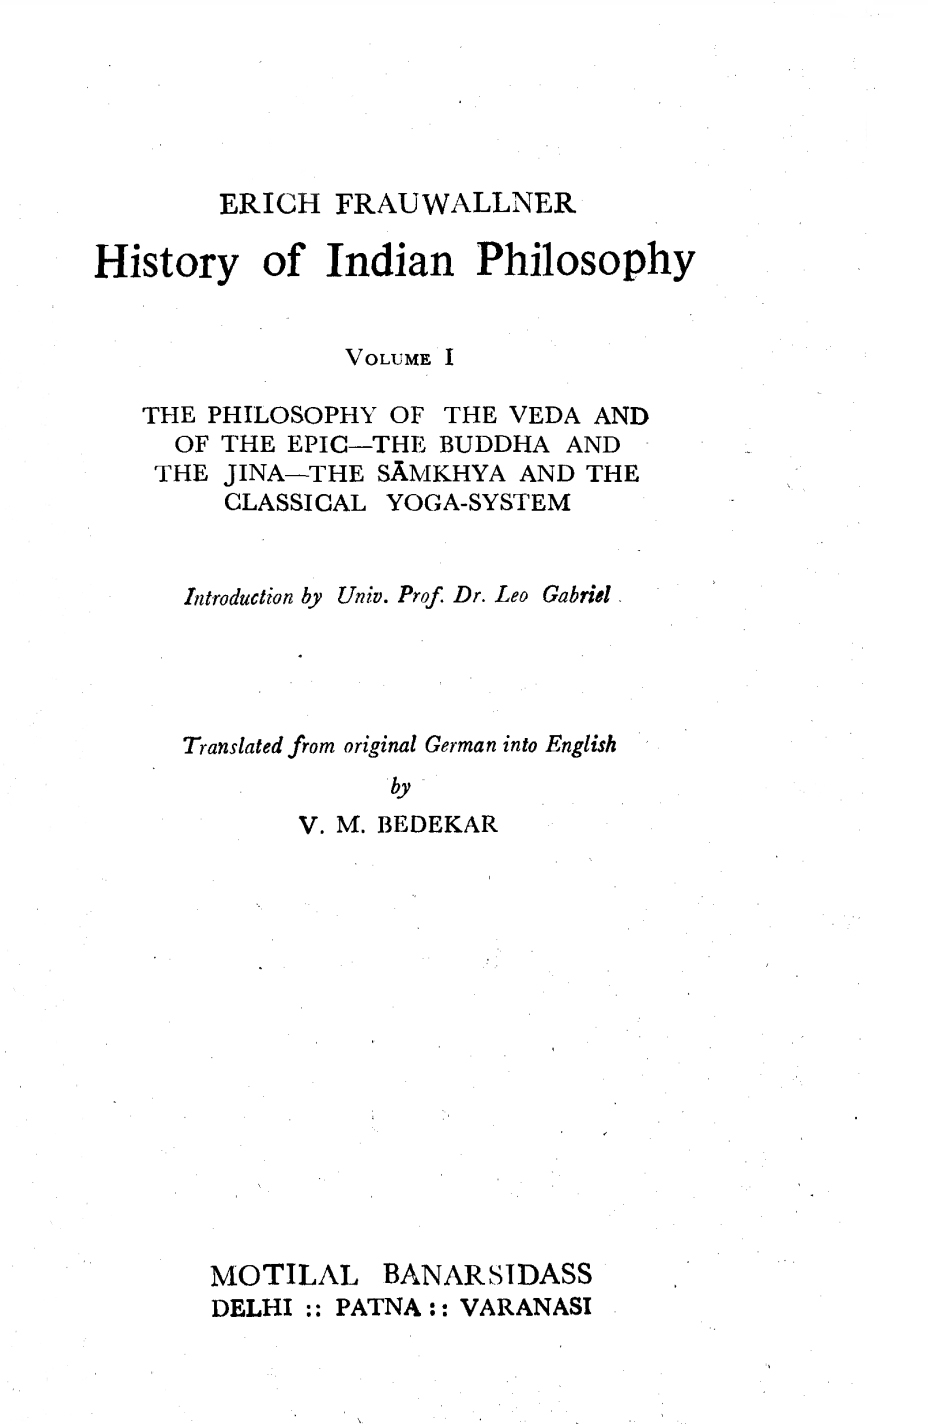 History of Indian Philosophy Frauwallner Vol. 1-front.jpg